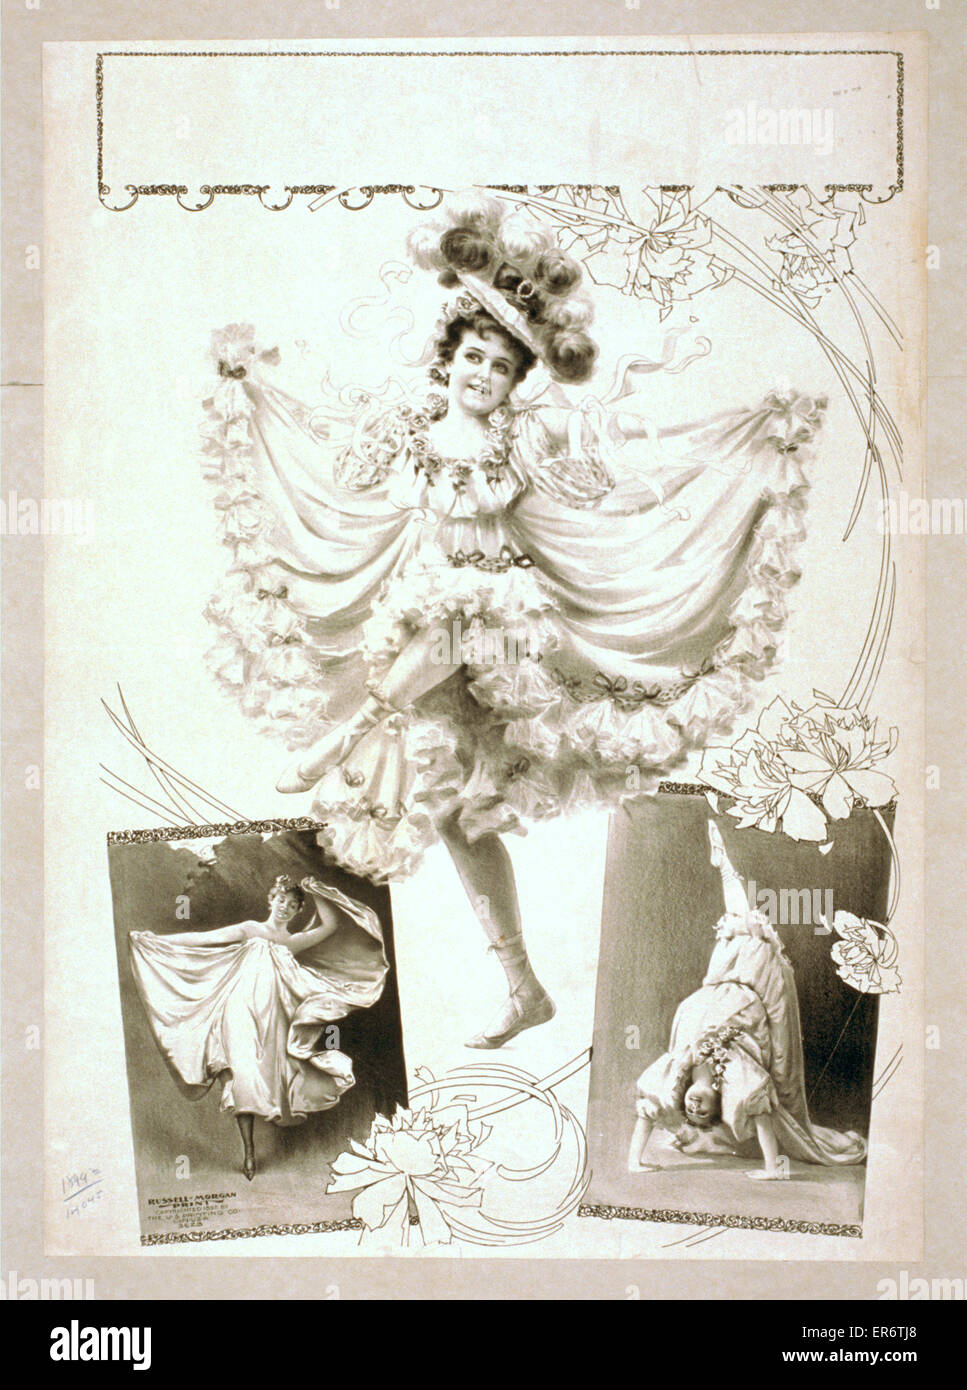 Woman dancing in two scenes, performing acrobatics in third Stock Photo